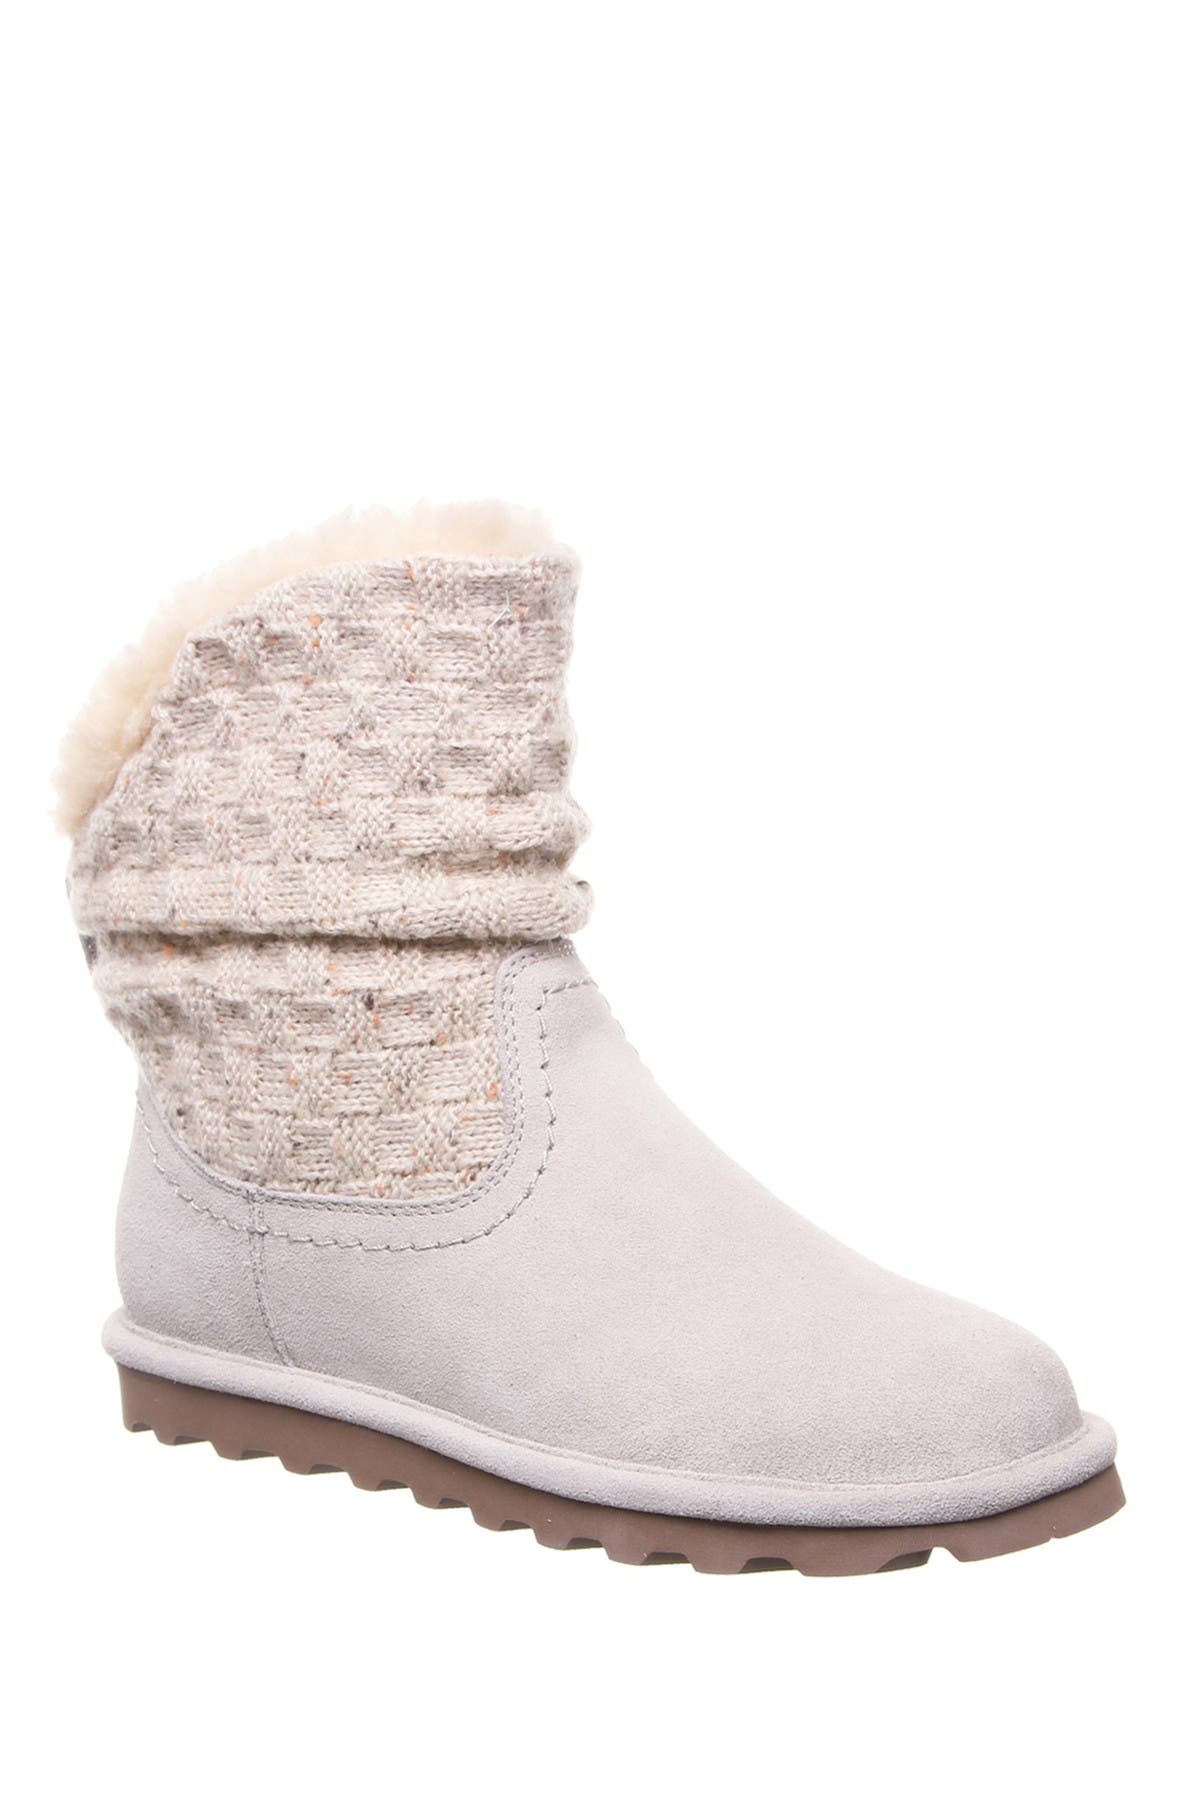 bearpaw grey knit boots